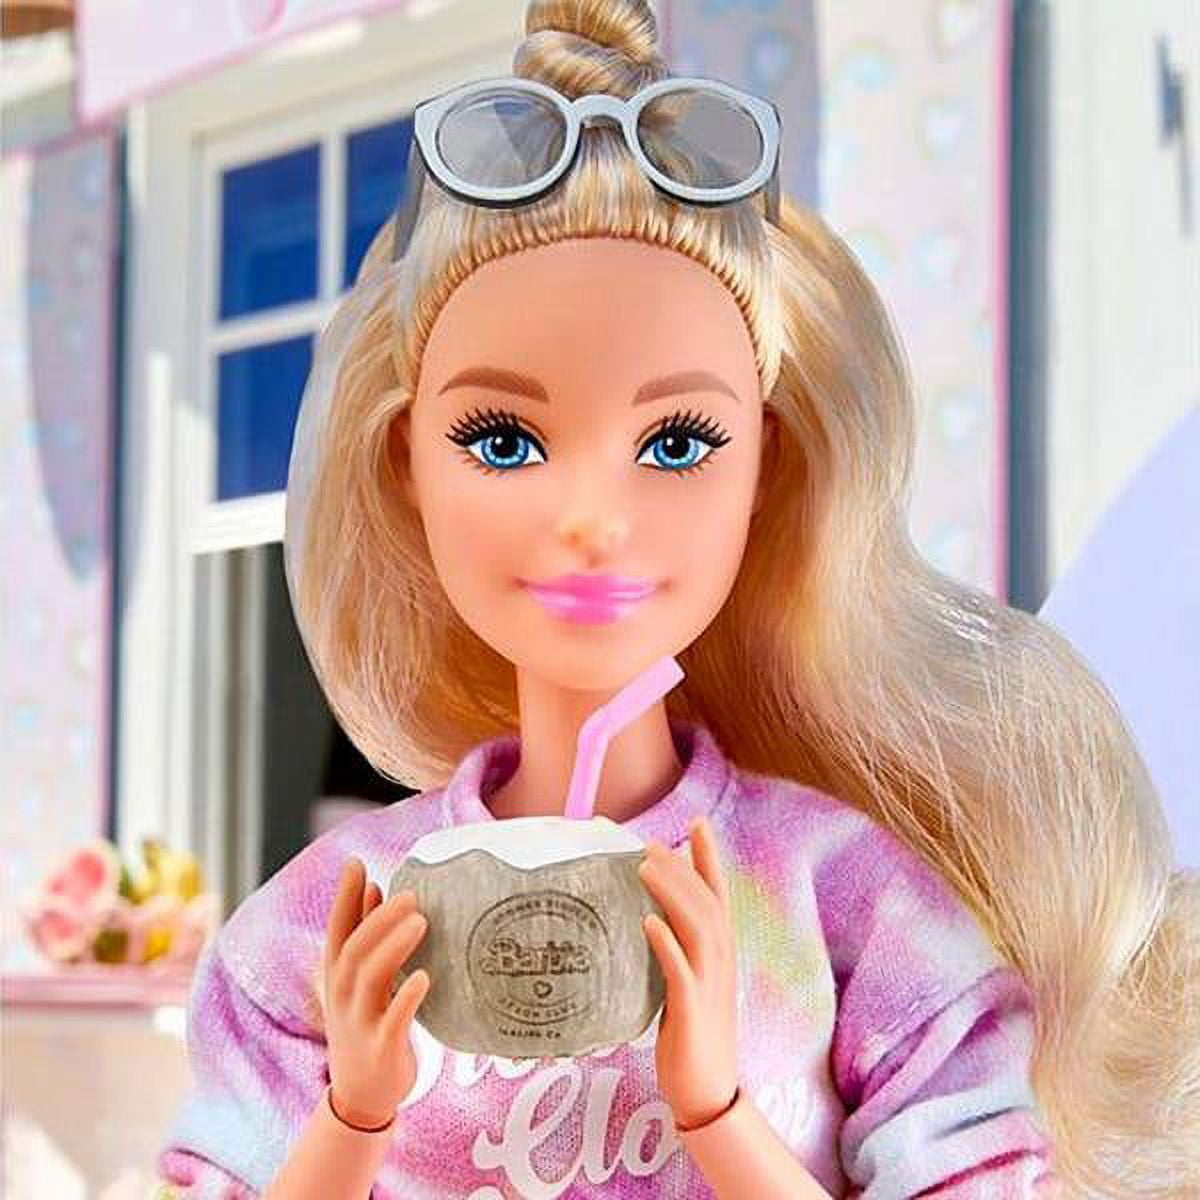 Co-Branded Colorful Dolls : Barbie & Stoney Clover Lane